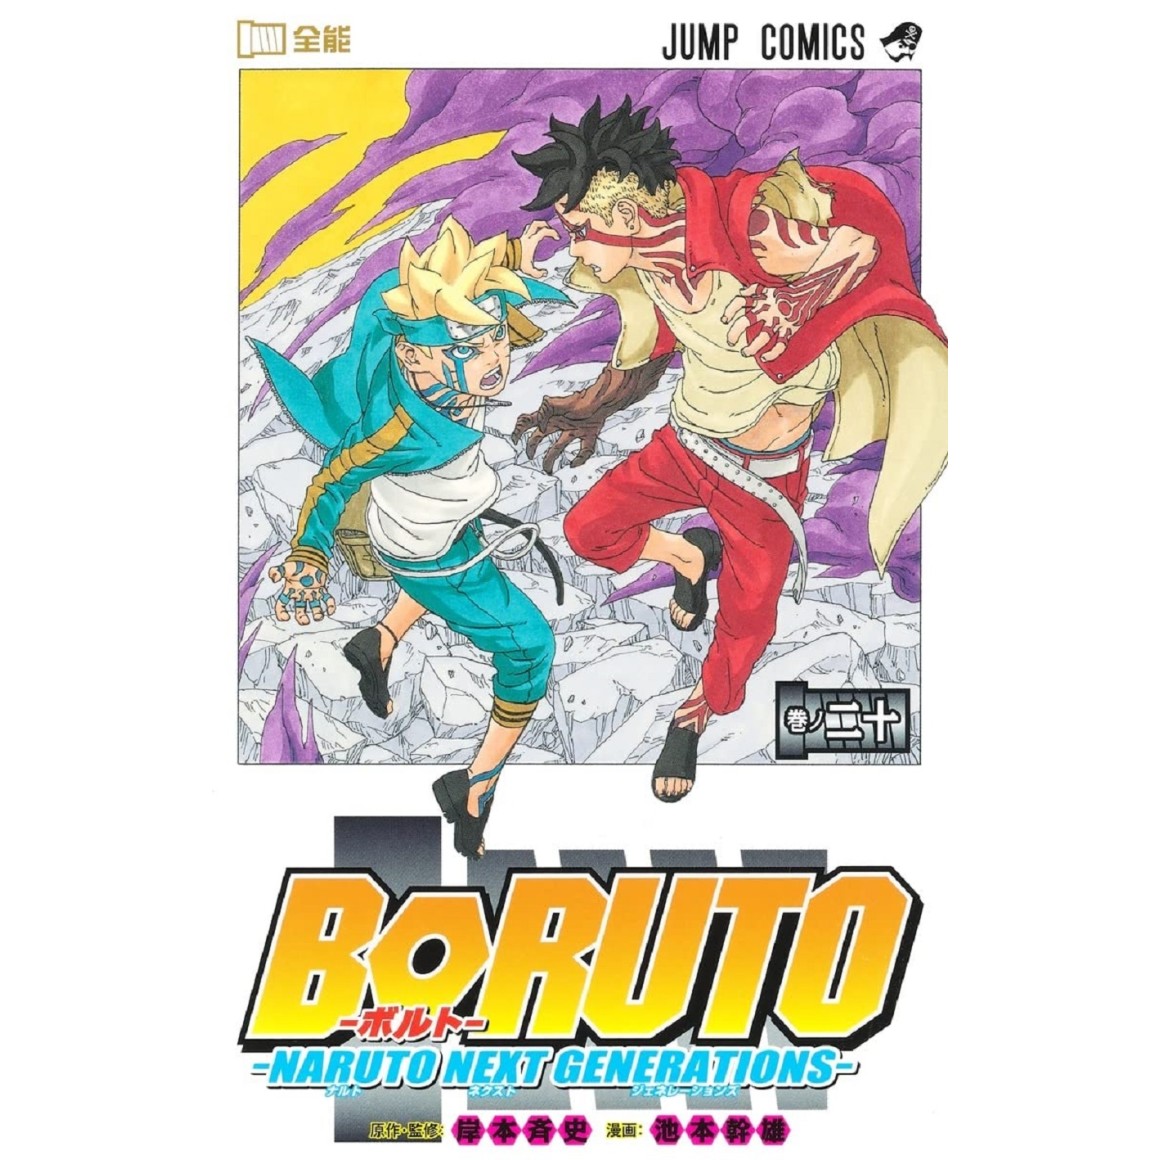 Boruto Vol. 19 - Naruto Next Generations - ISBN:9784088833828